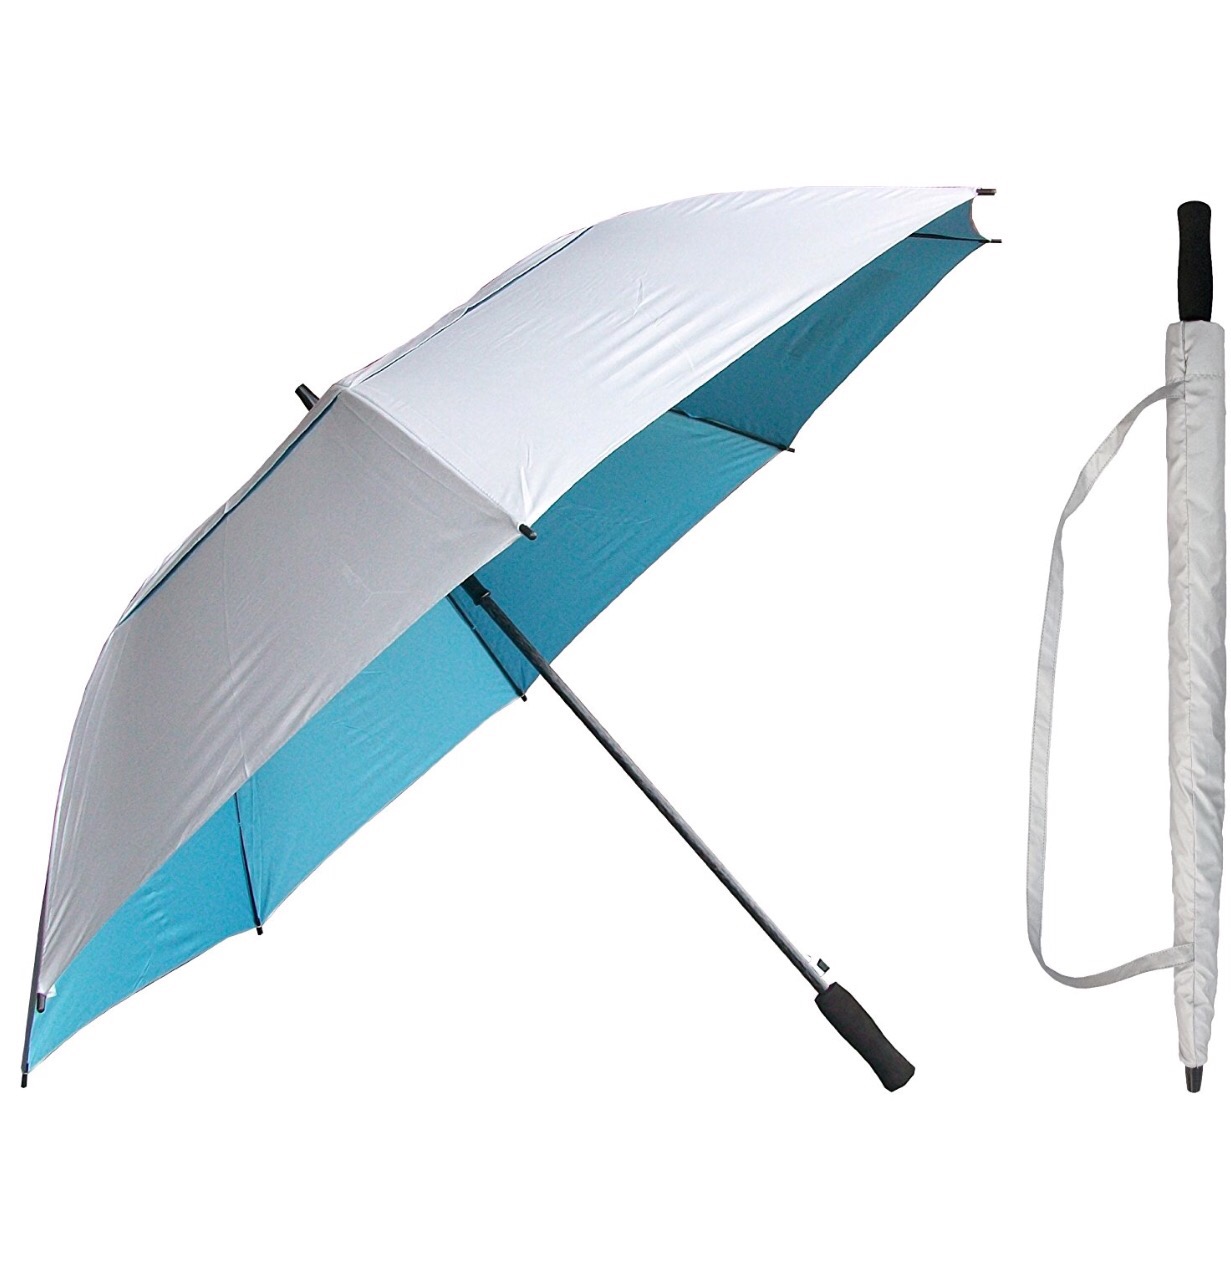 2017 Umbrella Trends Southern Laced inside Rain Umbrella With Shoulder Strap